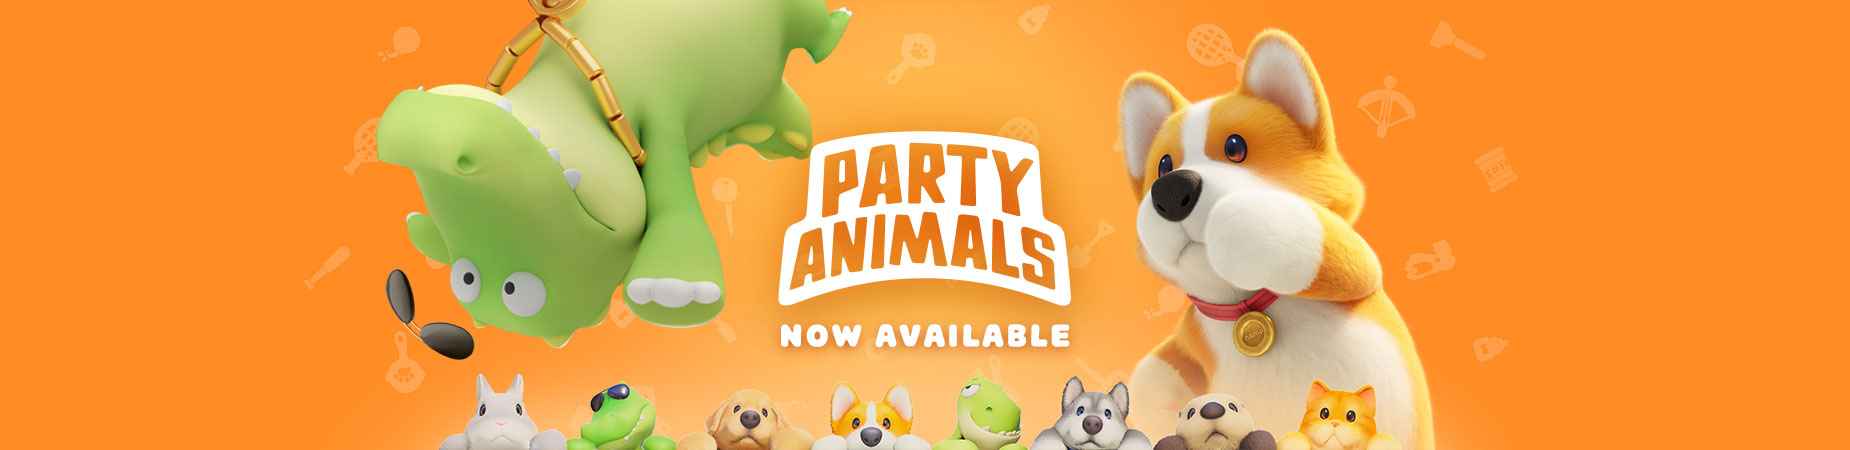 party_animals